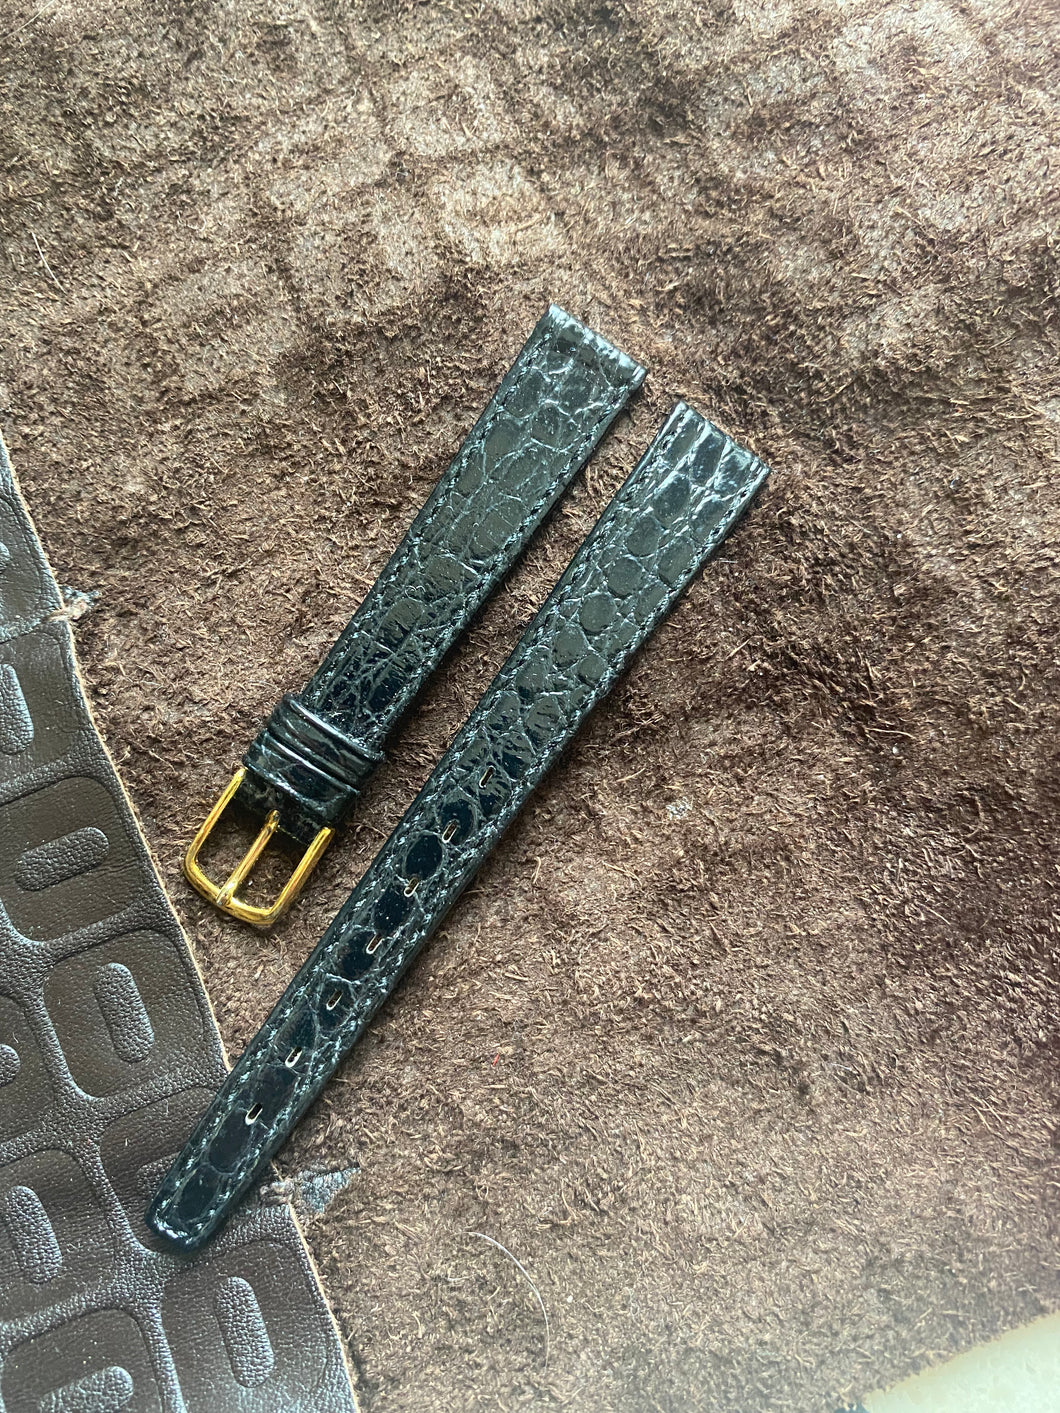 12mm/10mm Original Certina strap and original Certina buckle